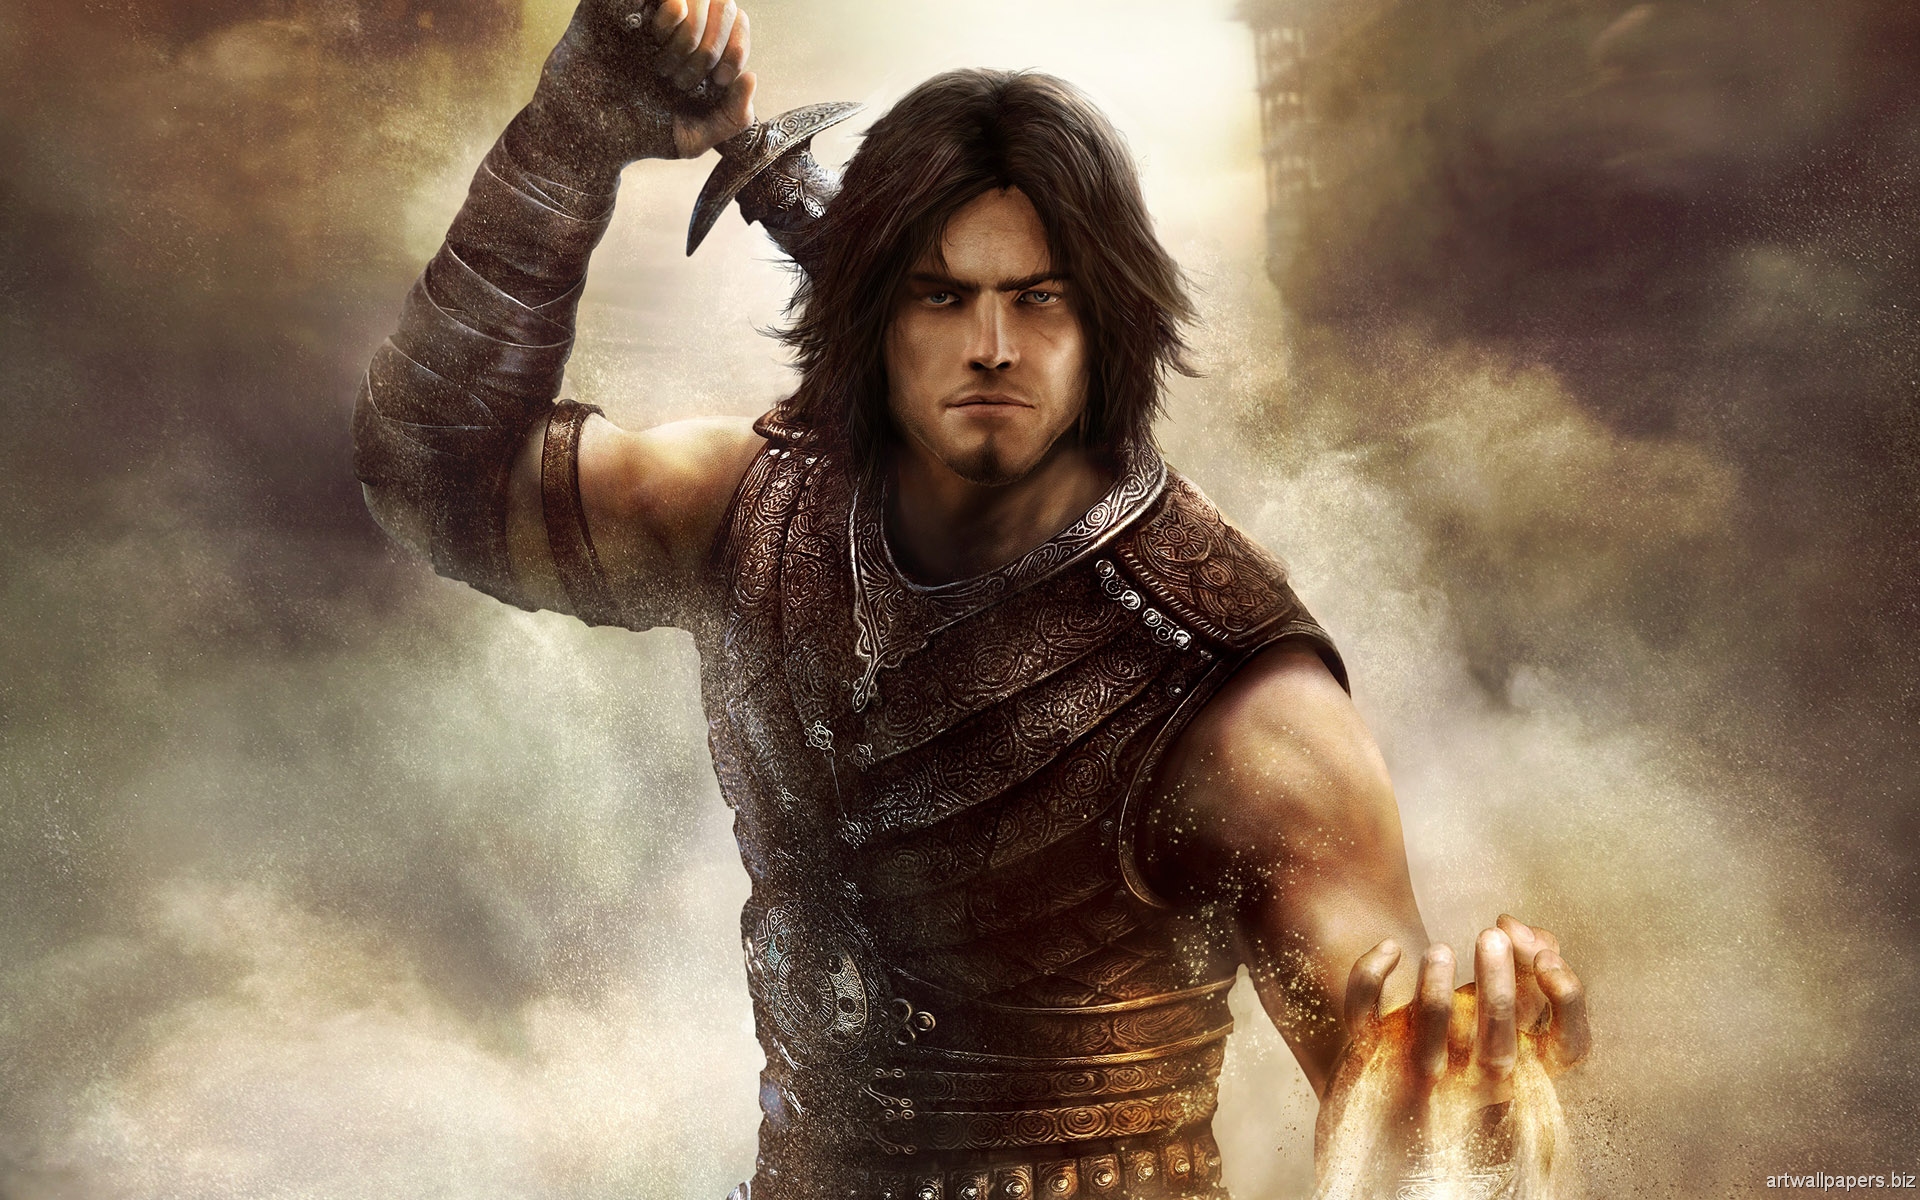 Arjun The Warrior Prince Movie Wallpaper For Desktop Short News